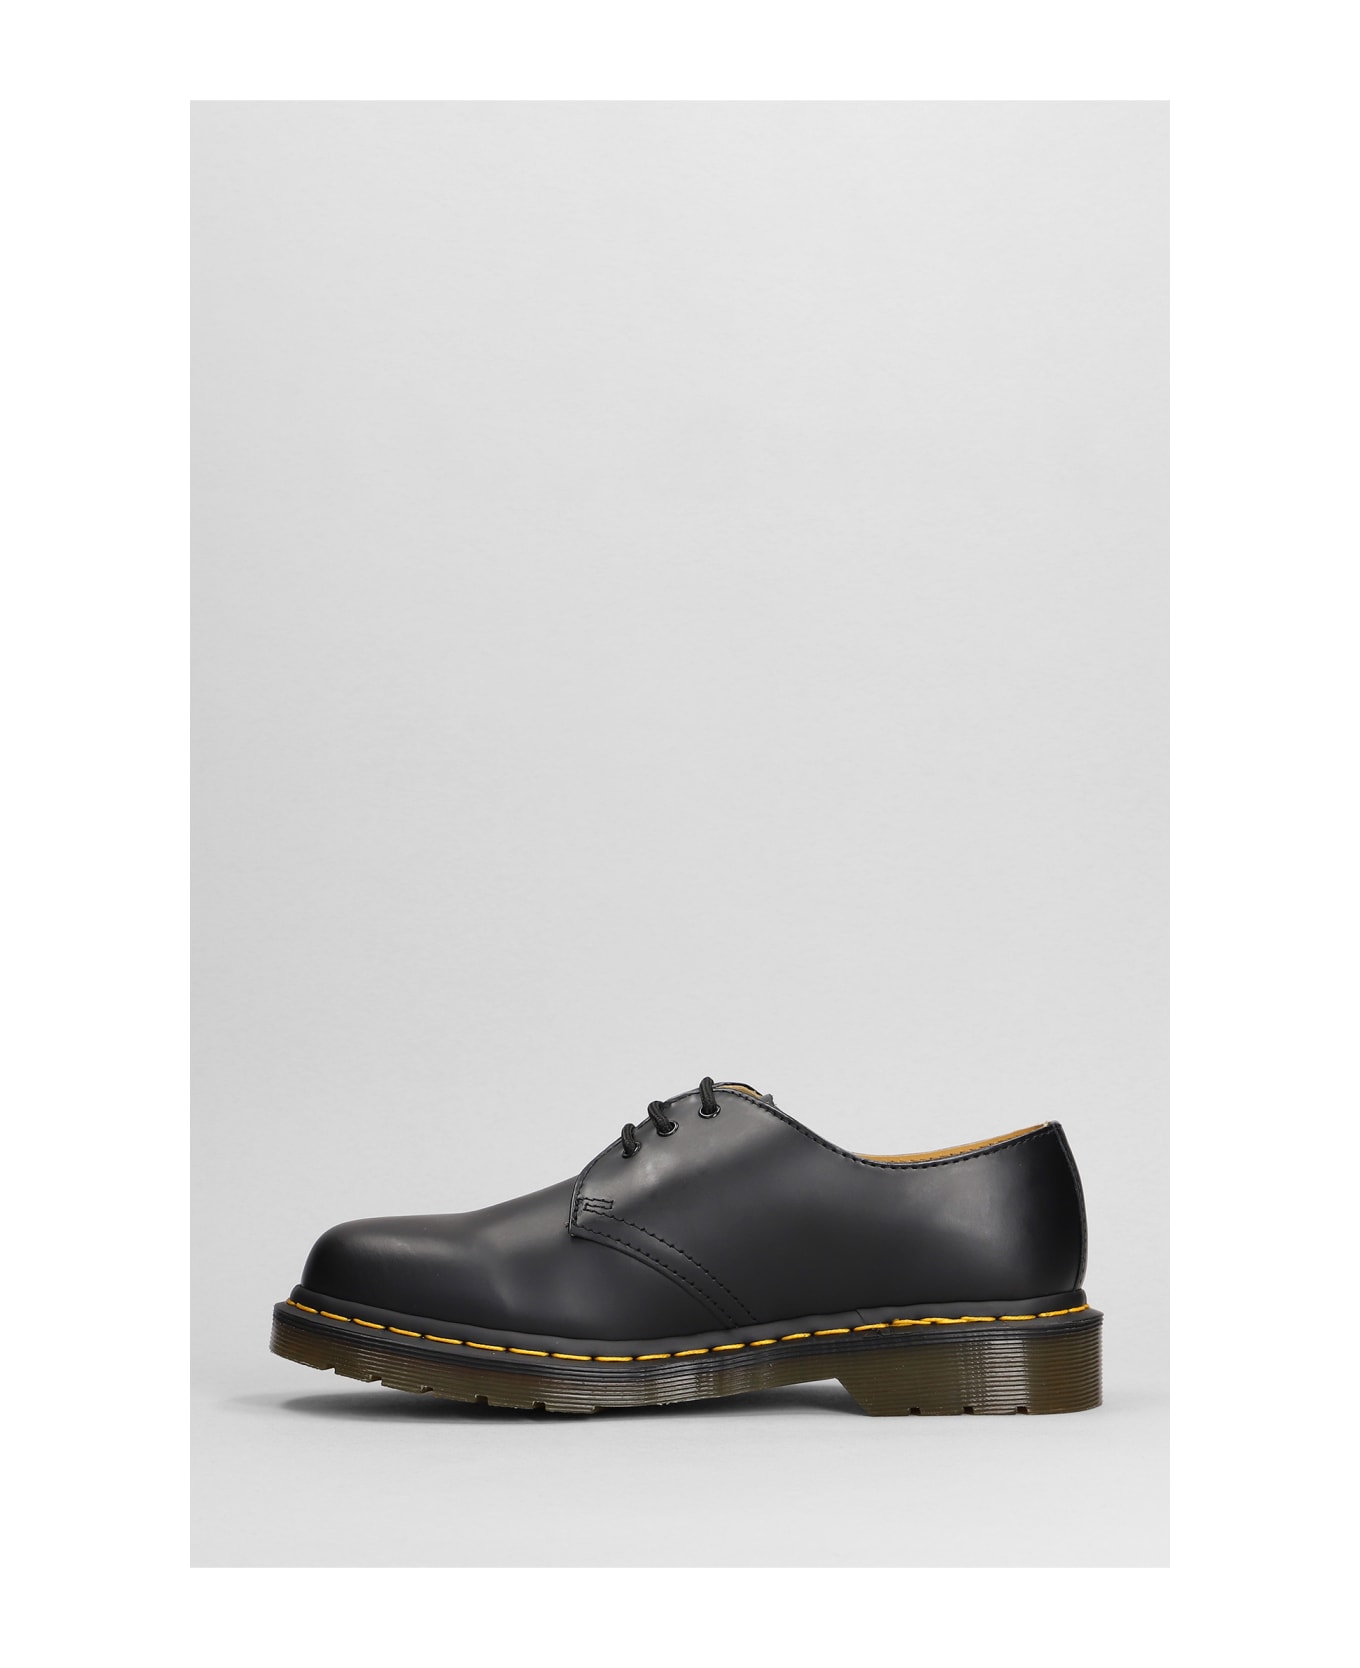 Dr. Martens 1461 Lace Up Shoes isabel In Black Leather - black